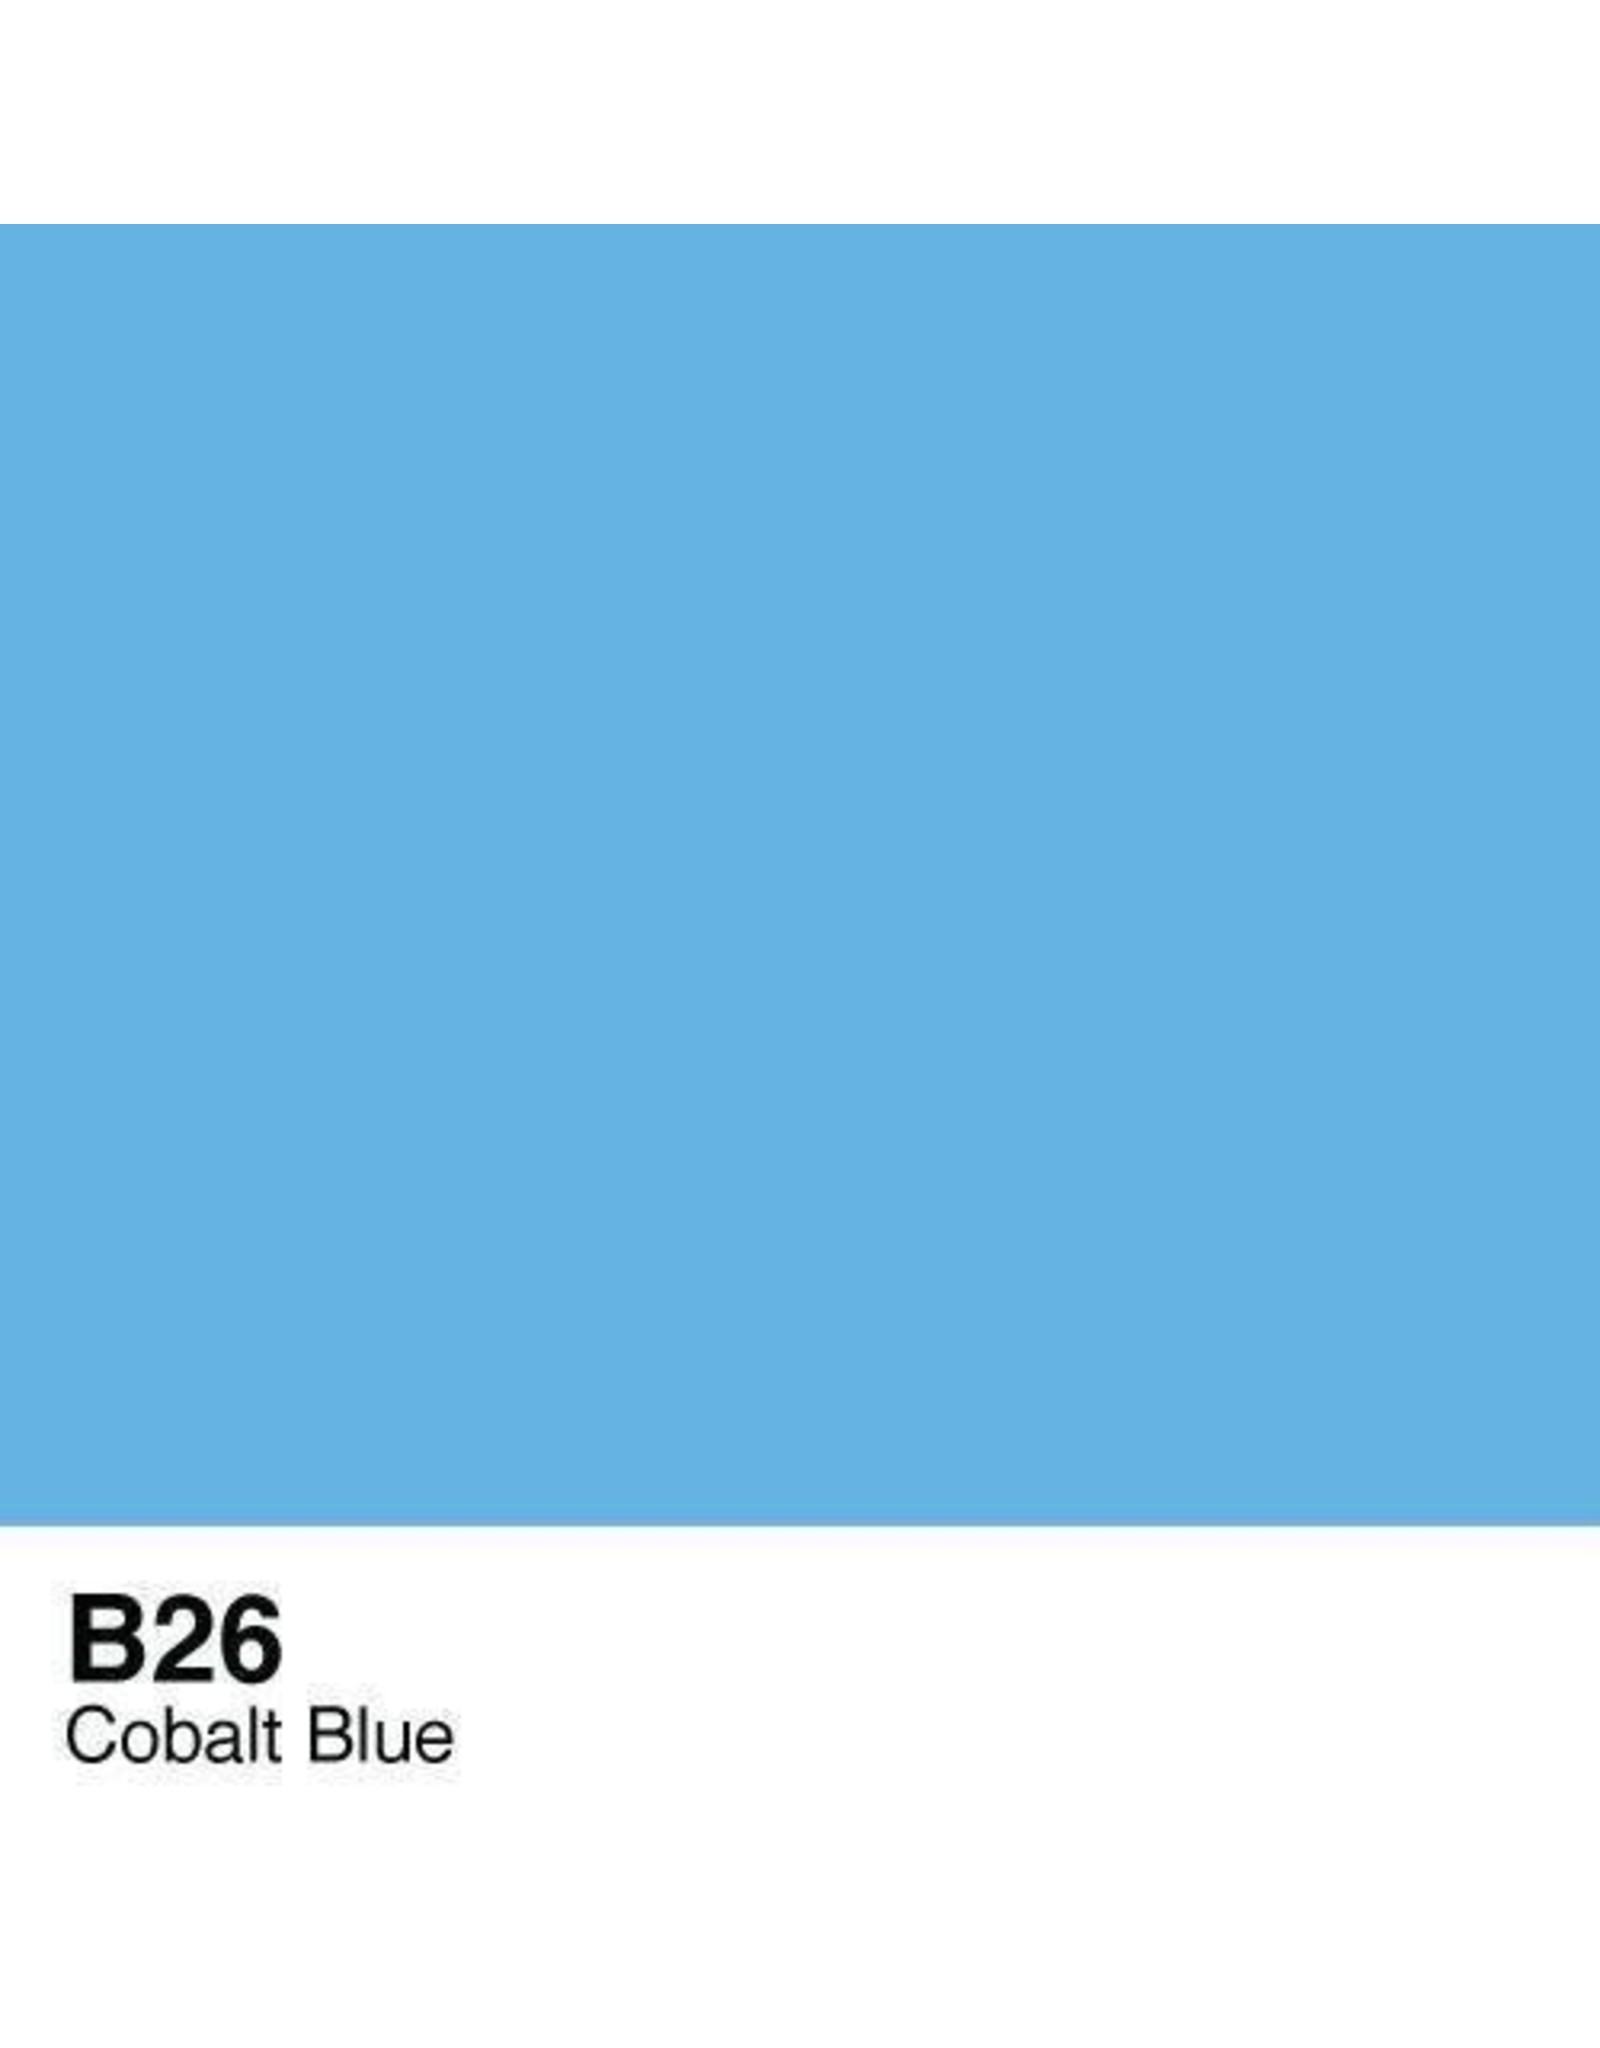 COPIC COPIC B26 COBALT BLUE SKETCH MARKER